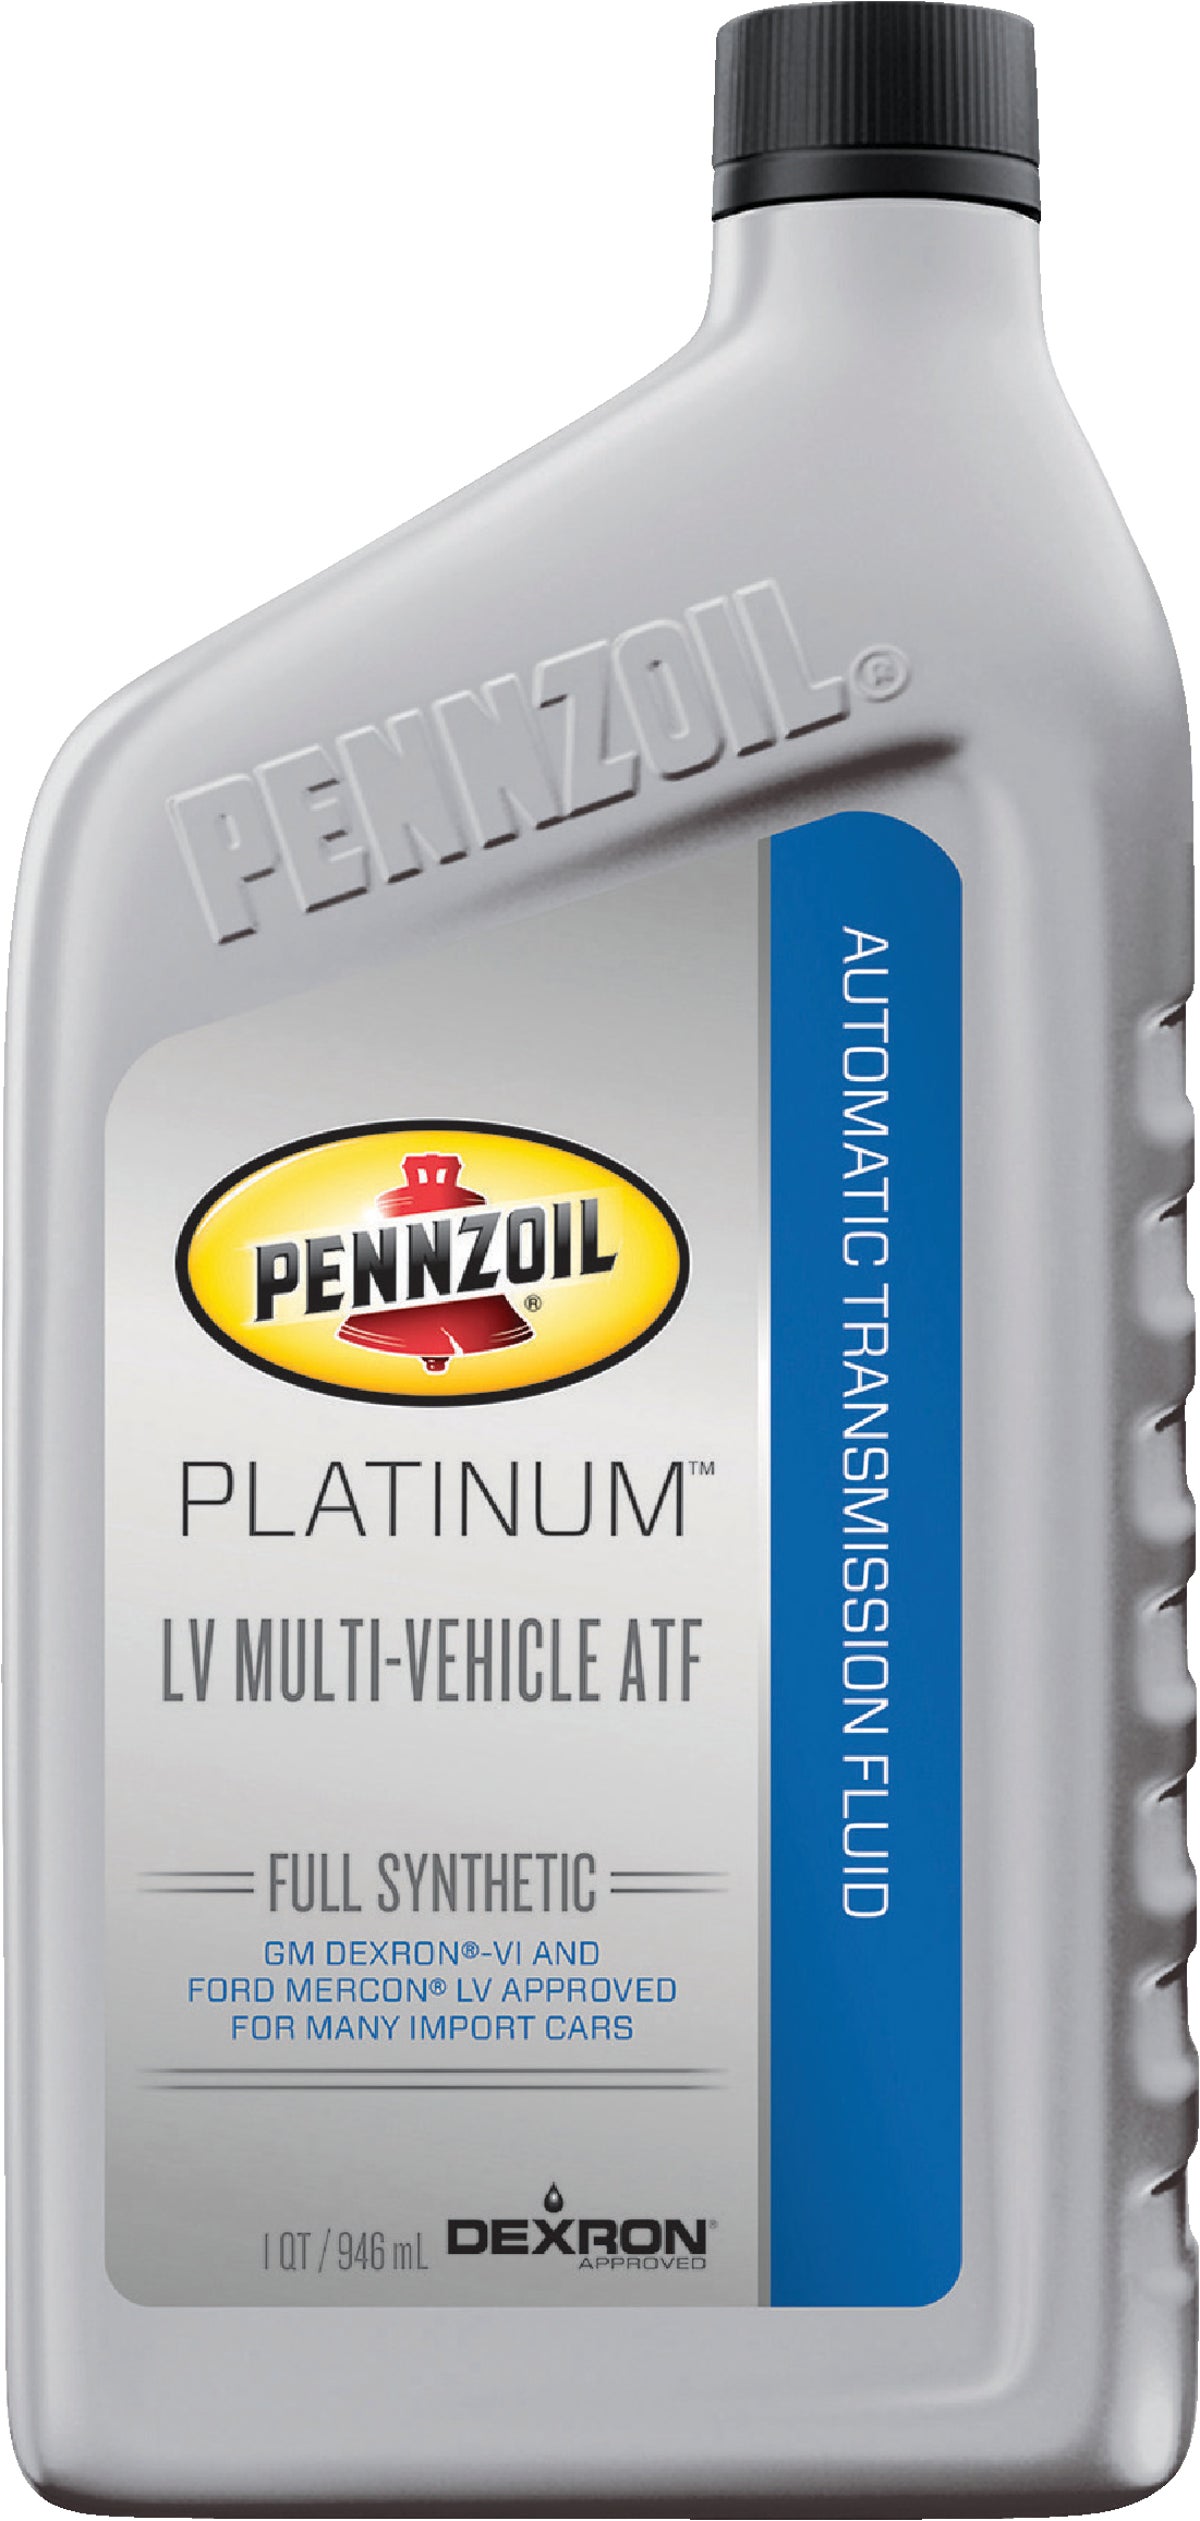 Platinum LV Multi-Vehicle ATF